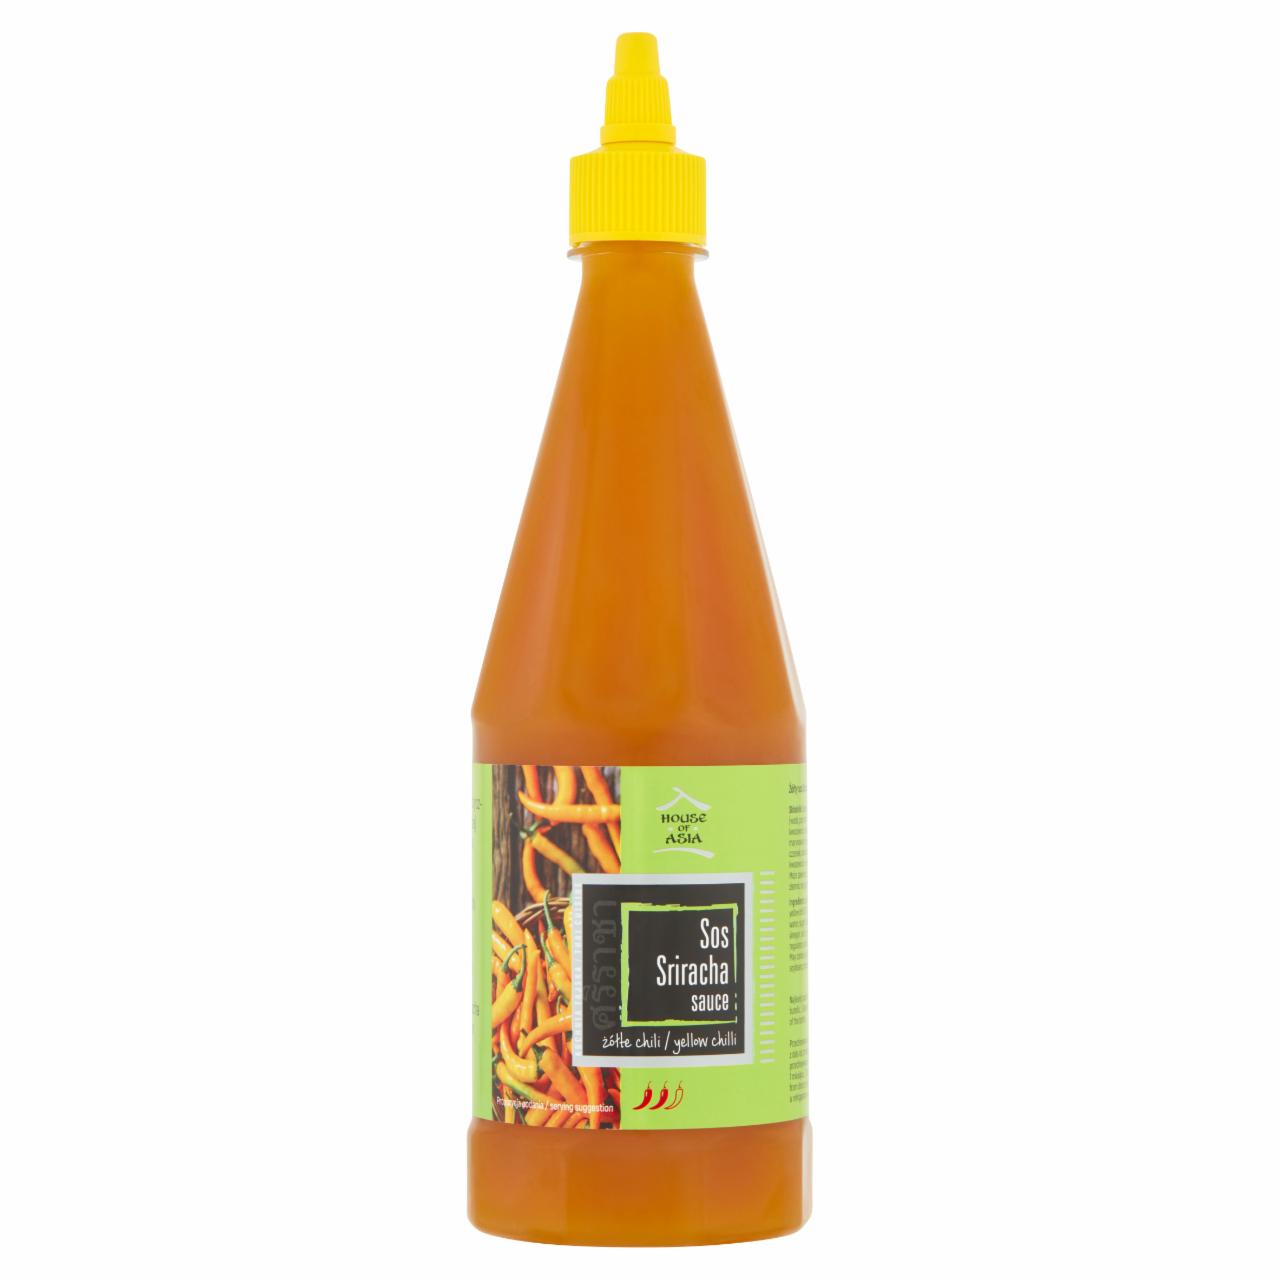 Zdjęcia - House of Asia Sos Sriracha żółte chili 825 g